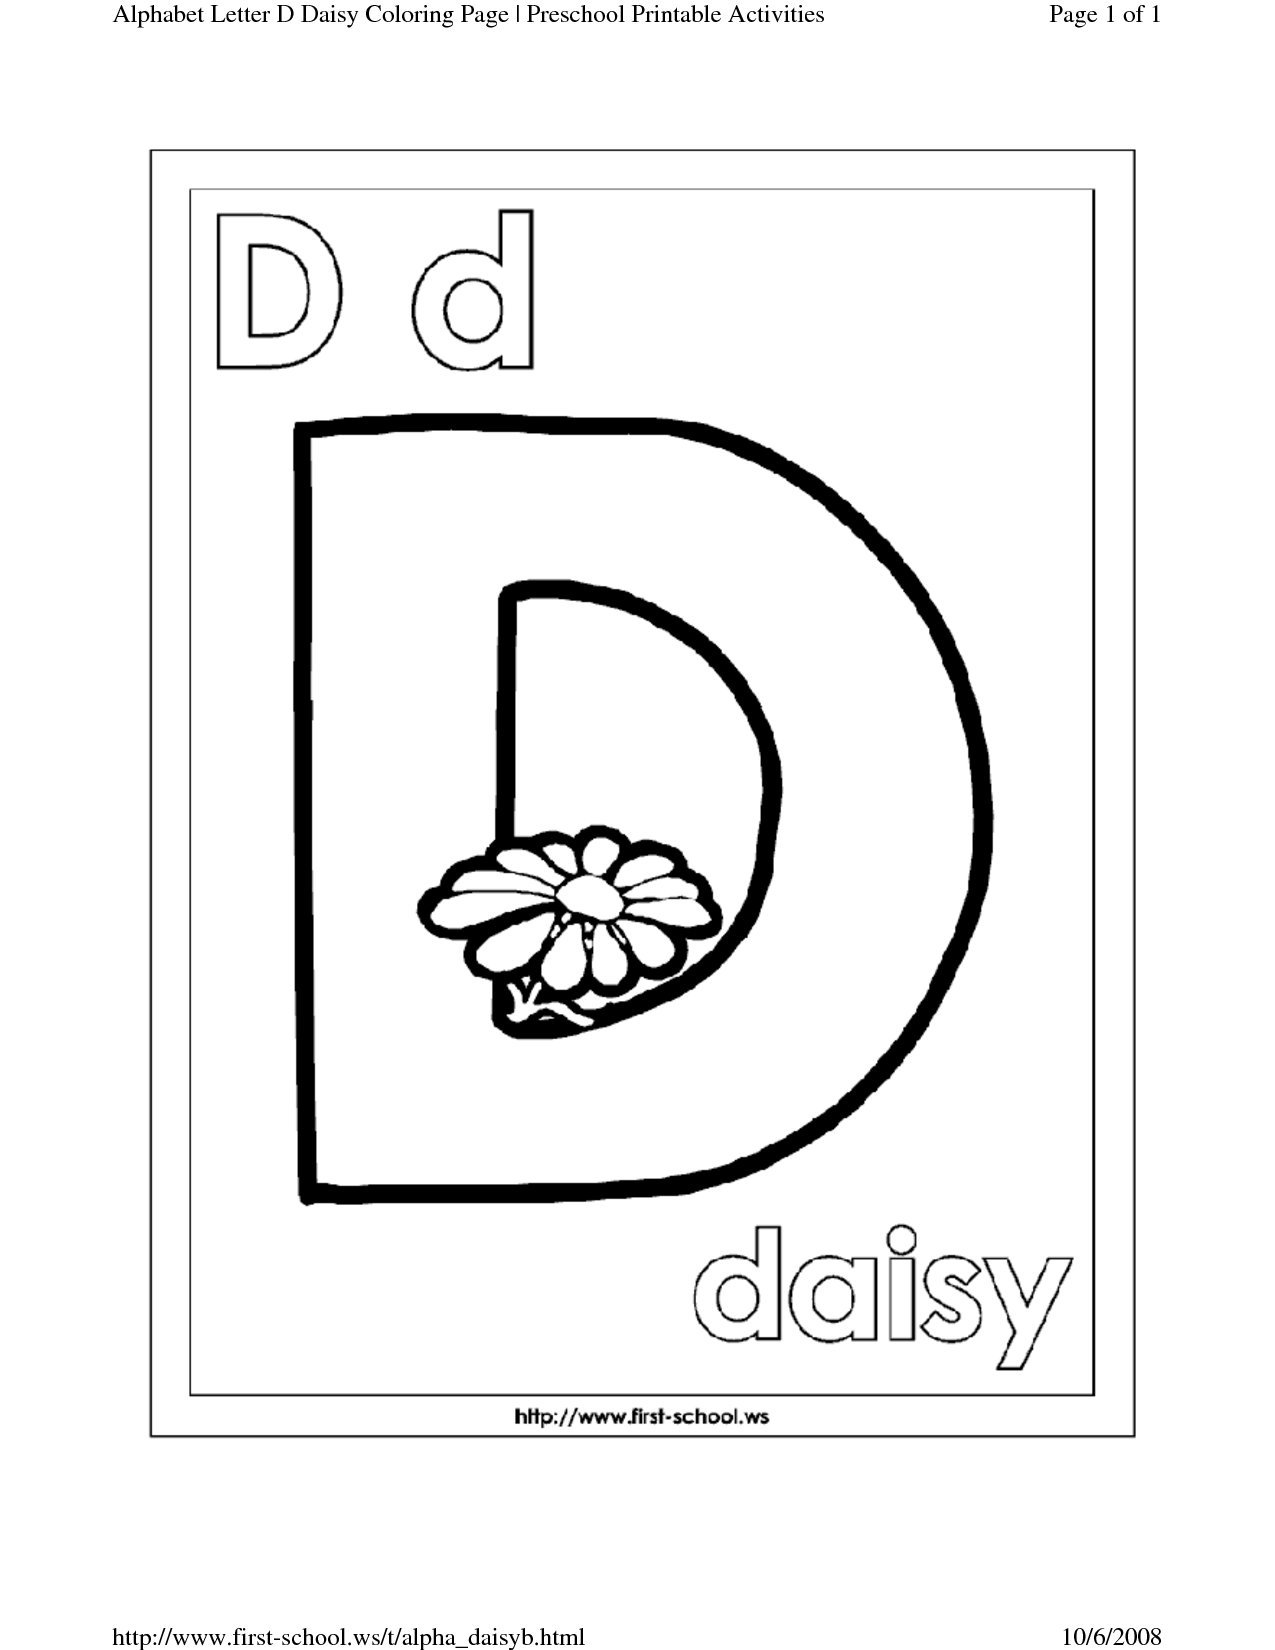 Letter D Coloring Worksheets For Preschool - The Largest And Most Inside Letter D Worksheet For Preschool